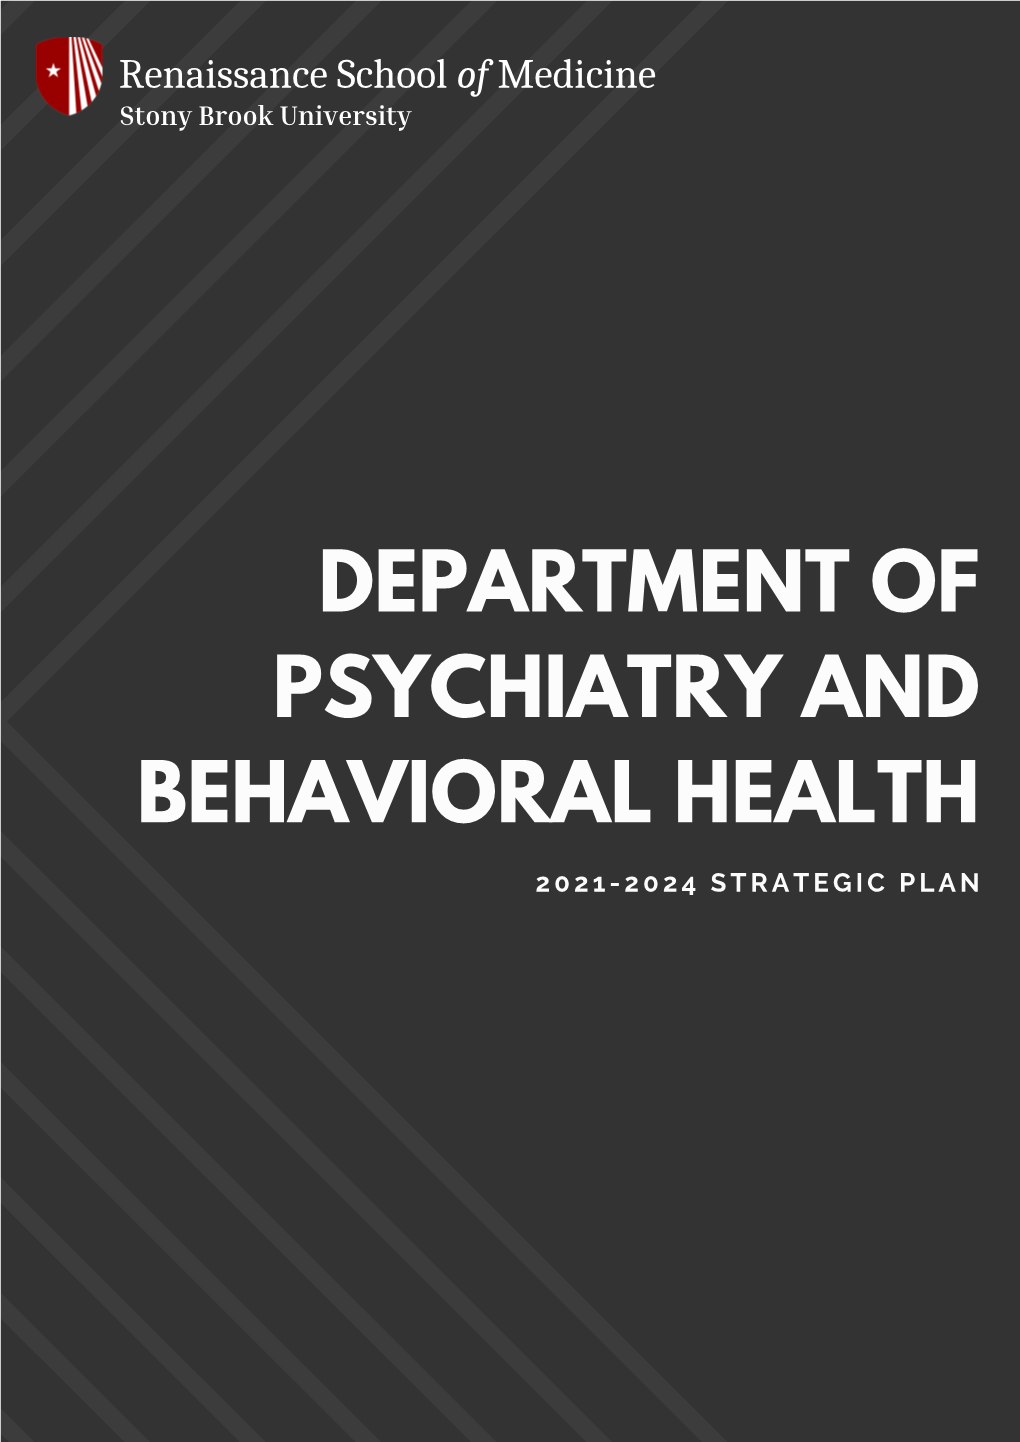 Psychiatry and Behavioral Health Strategic Plan